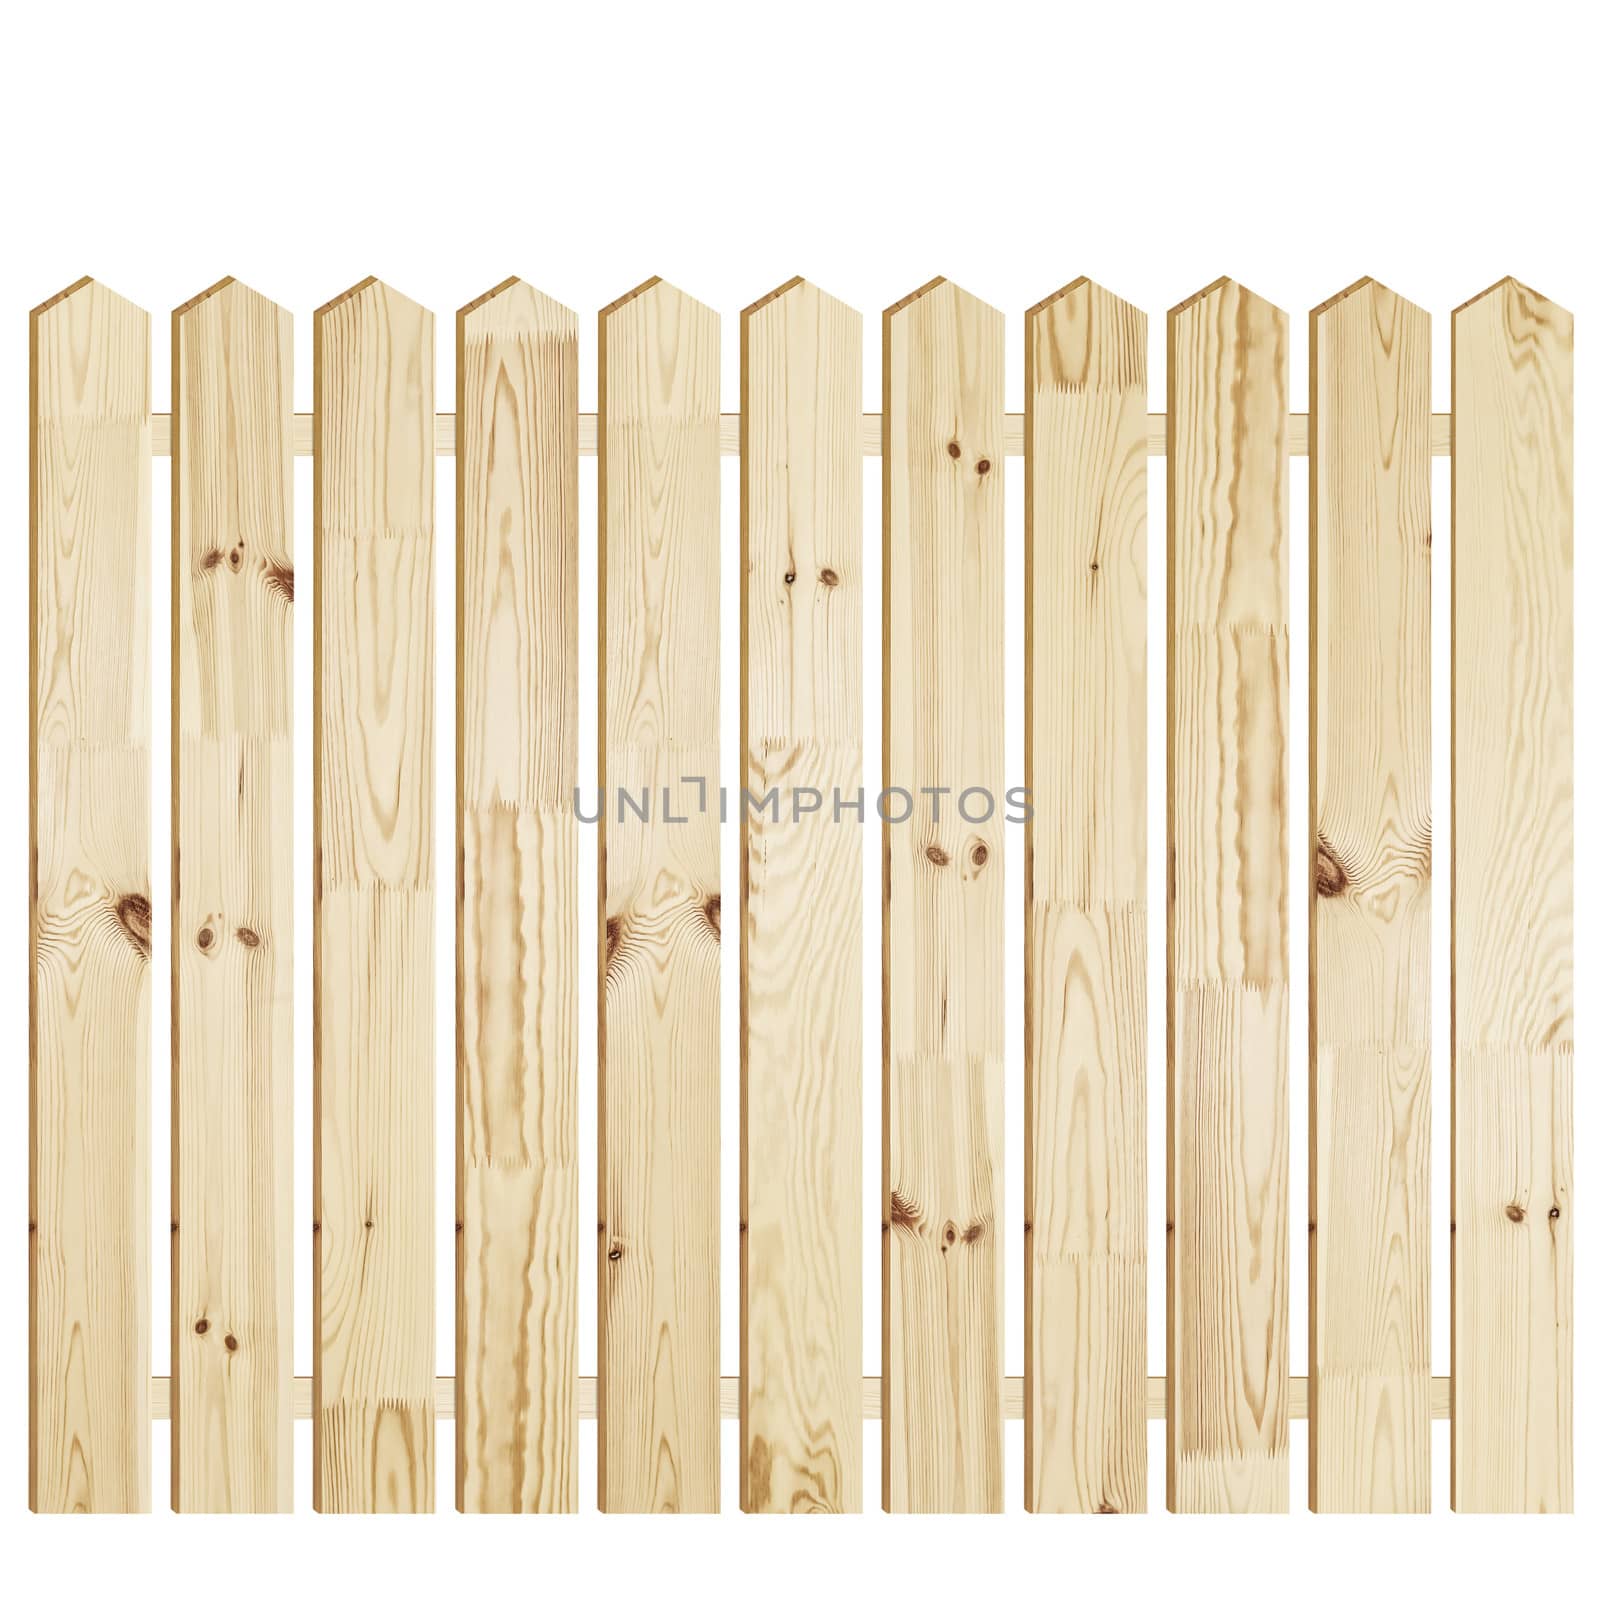 Wooden Fence Over The White Backgroynd